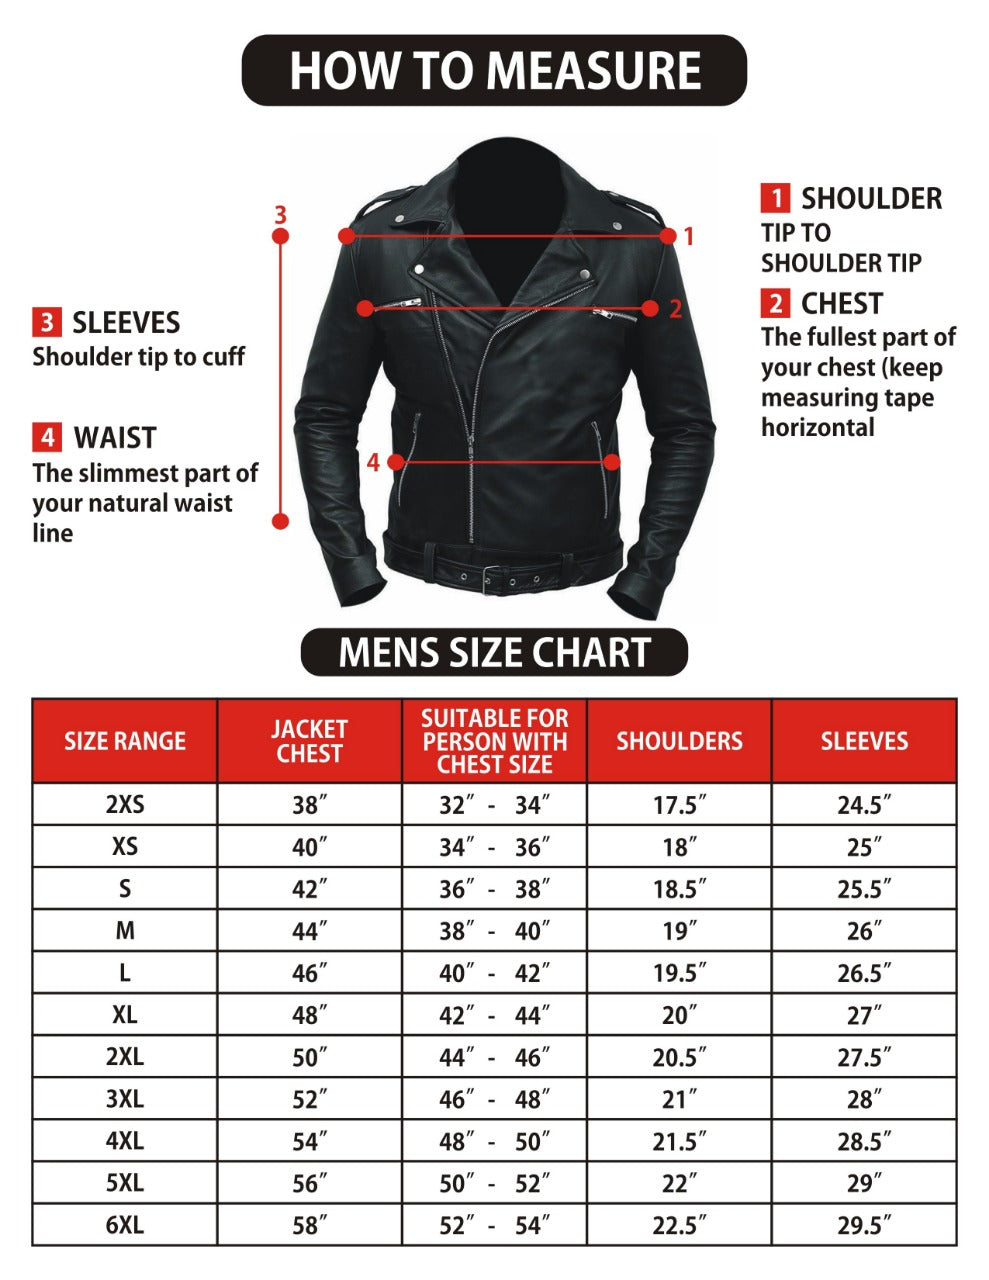 Spine Spark Men's Full Black Leather Biker Style Coat & Jacket